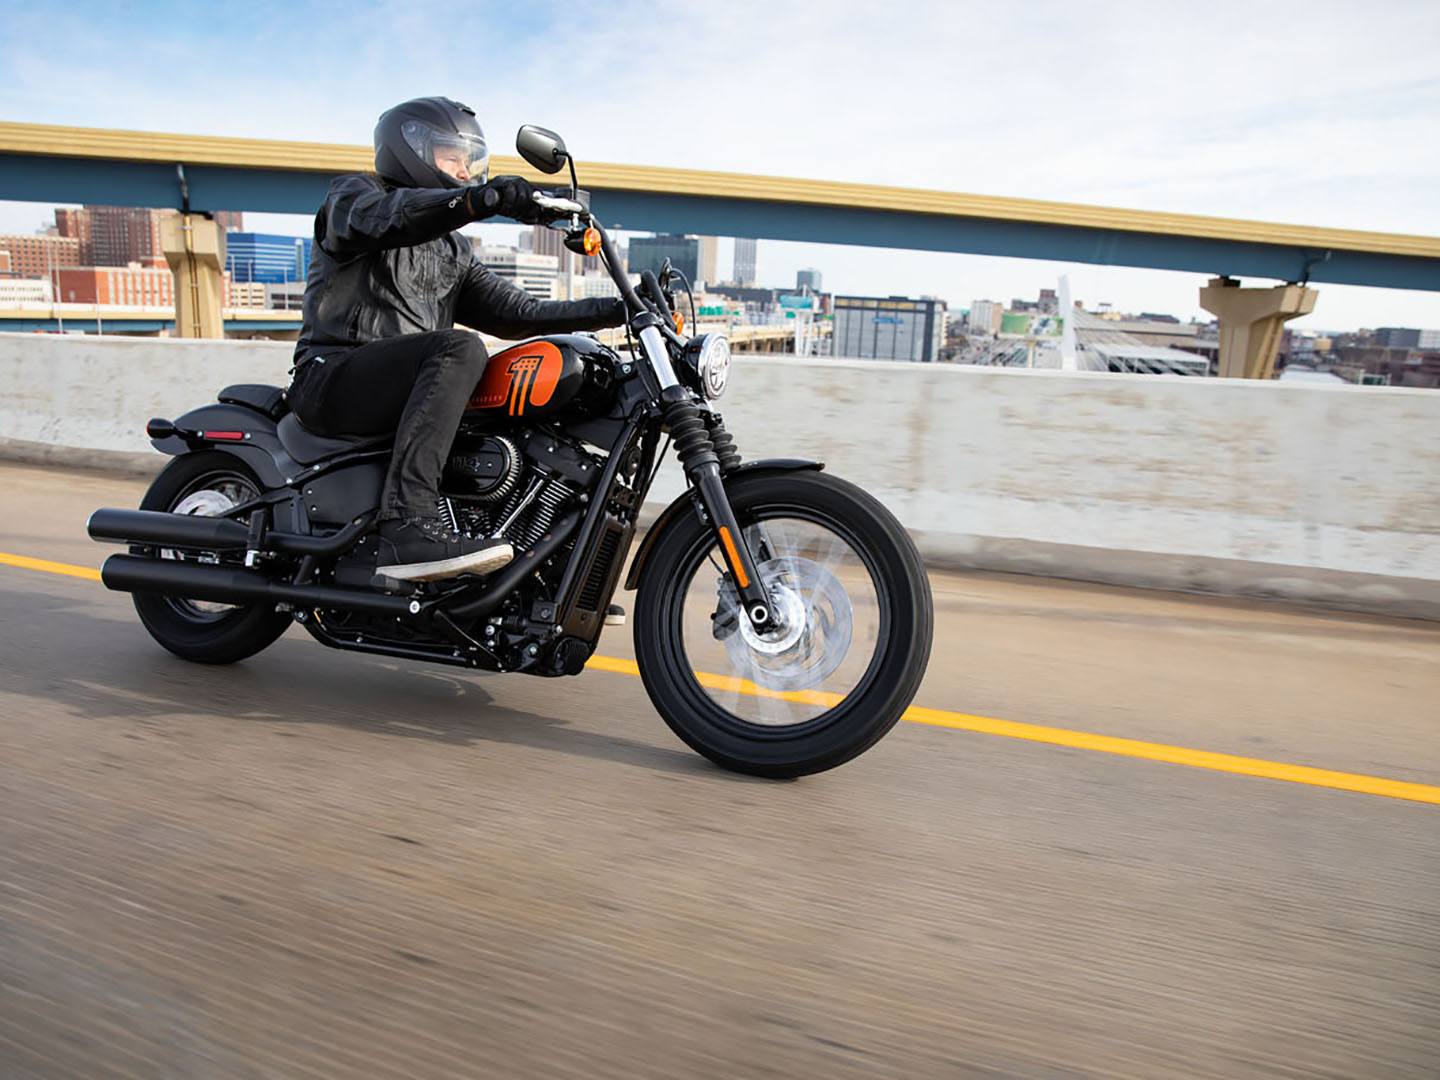 2021 Harley-Davidson Street Bob® 114 in New York Mills, New York - Photo 10